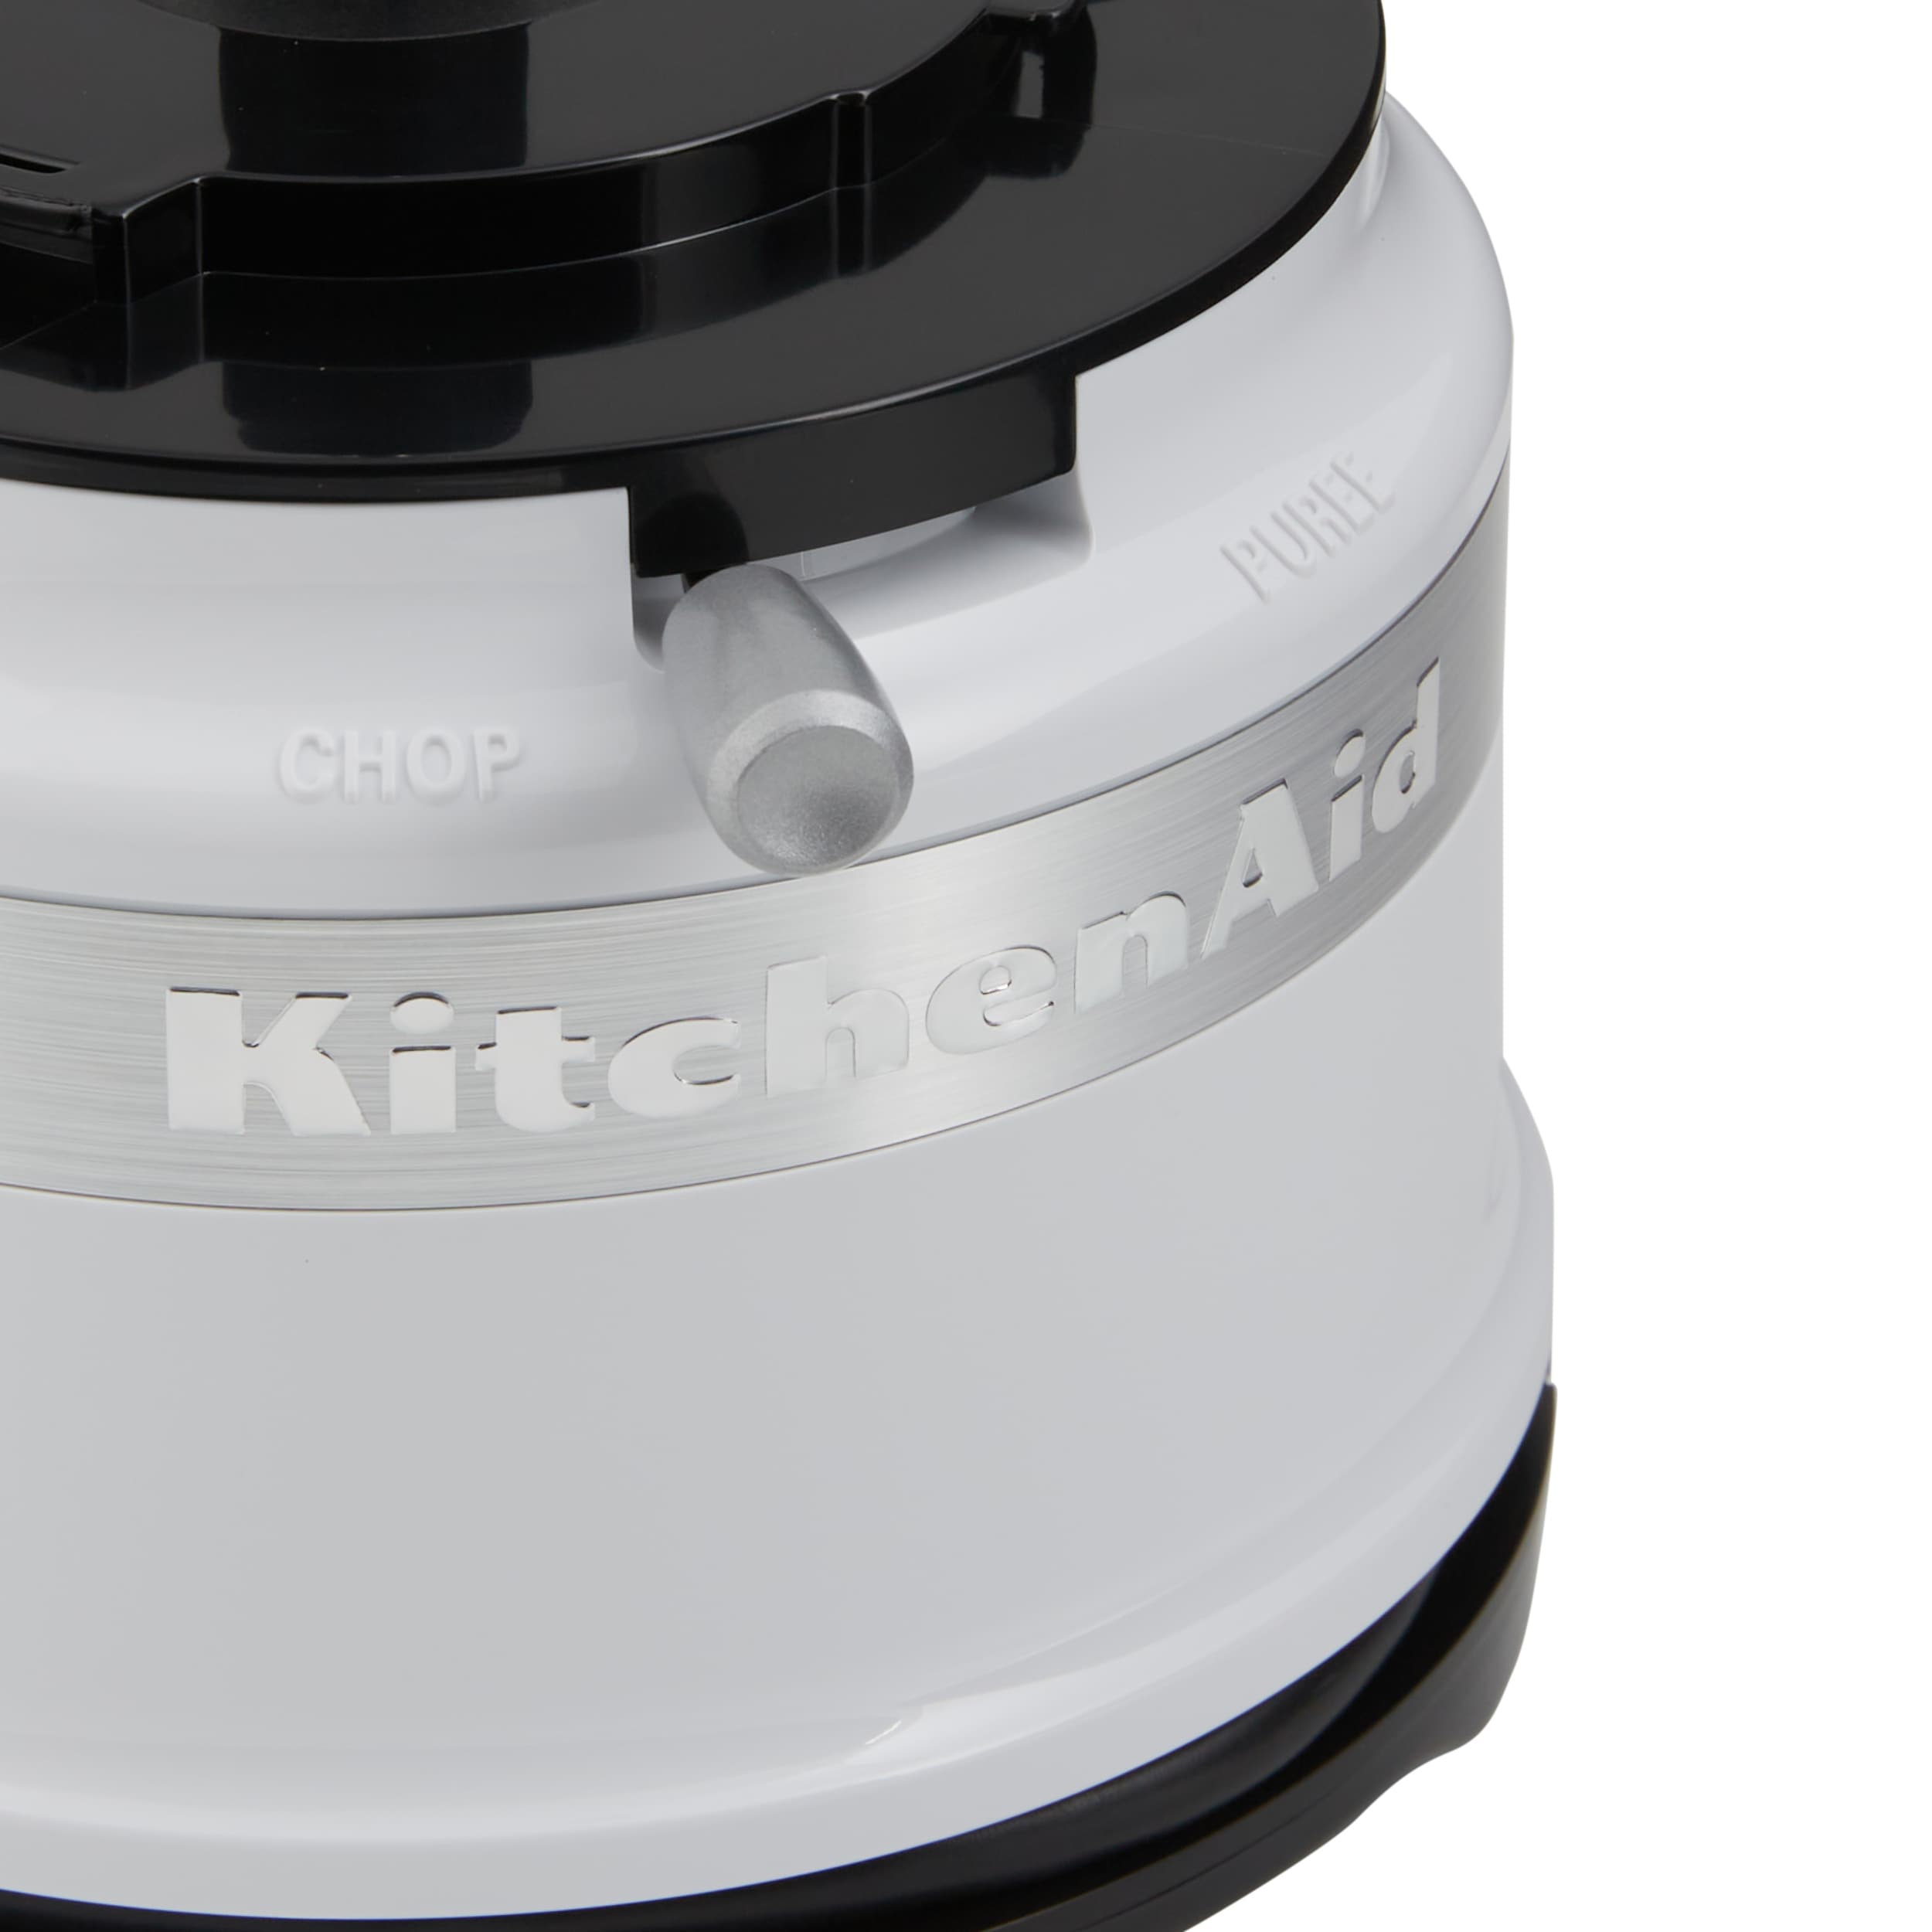 KitchenAid Compact Lightweight 3.5 Cup Food Chopper KFC3510 (No